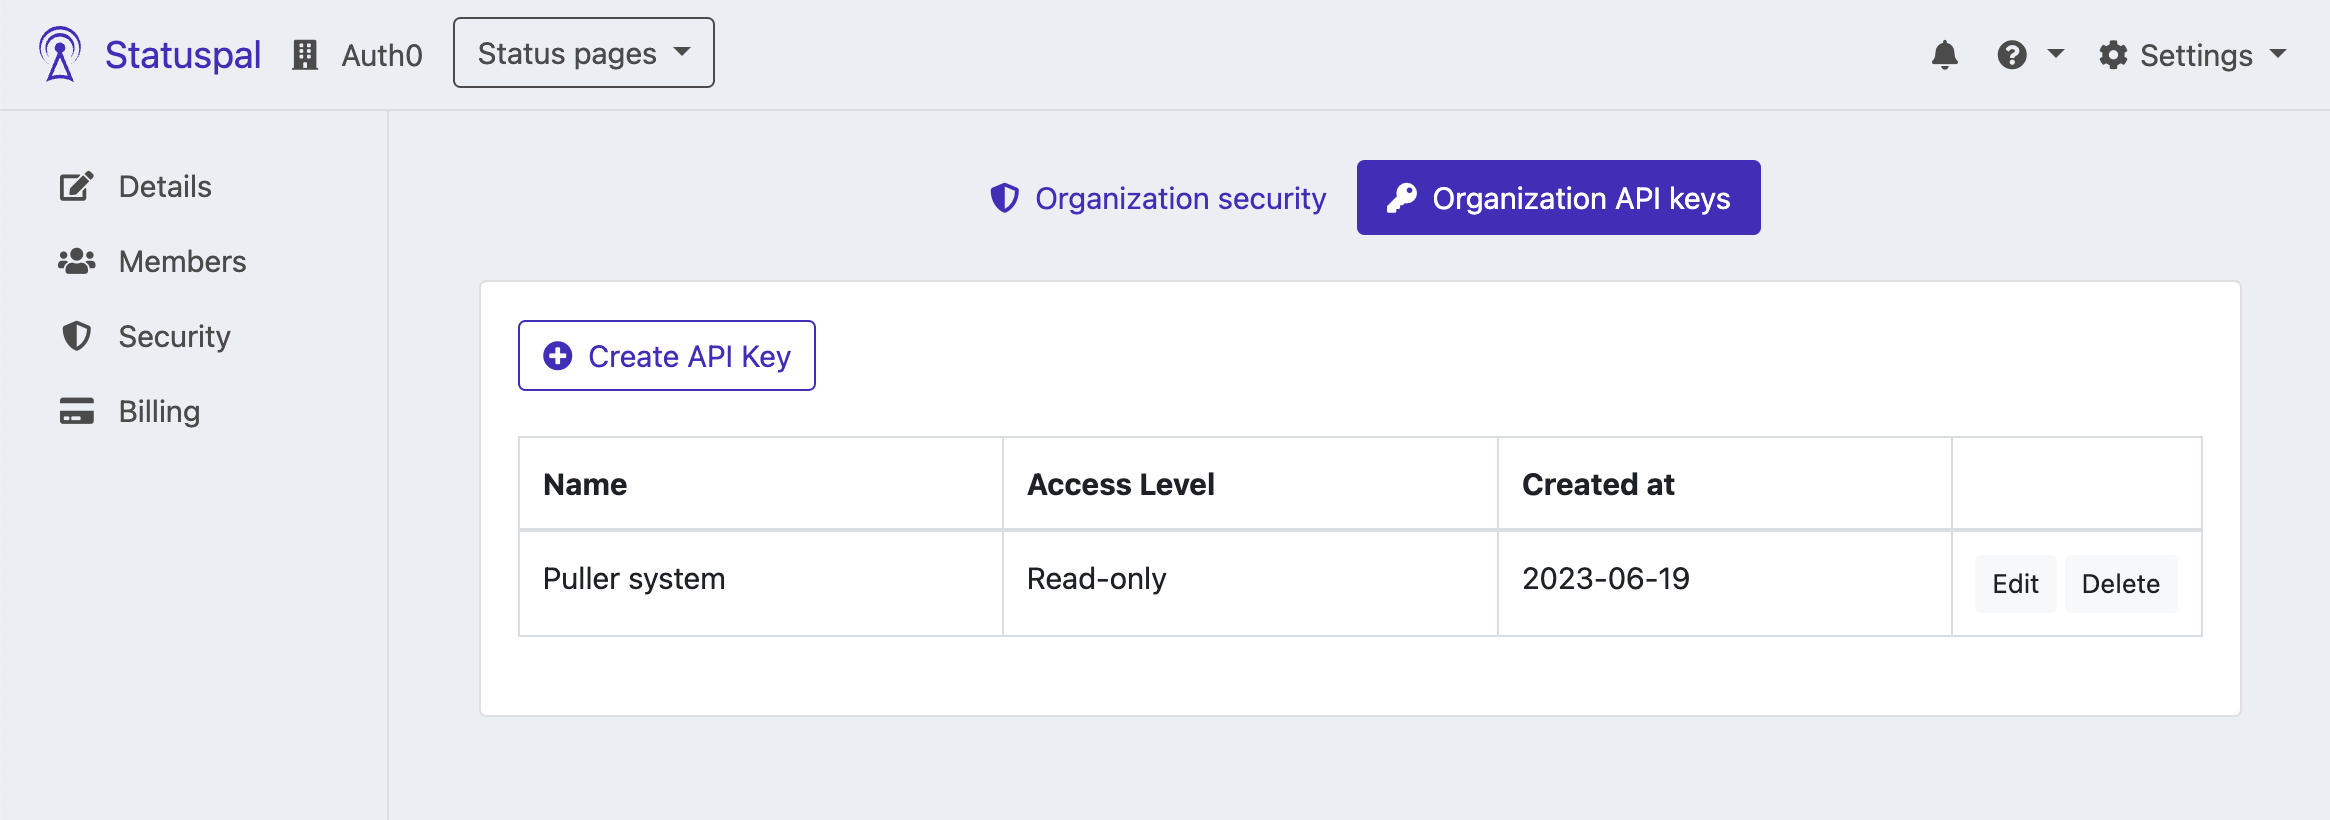 Organization-level API keys for your status page